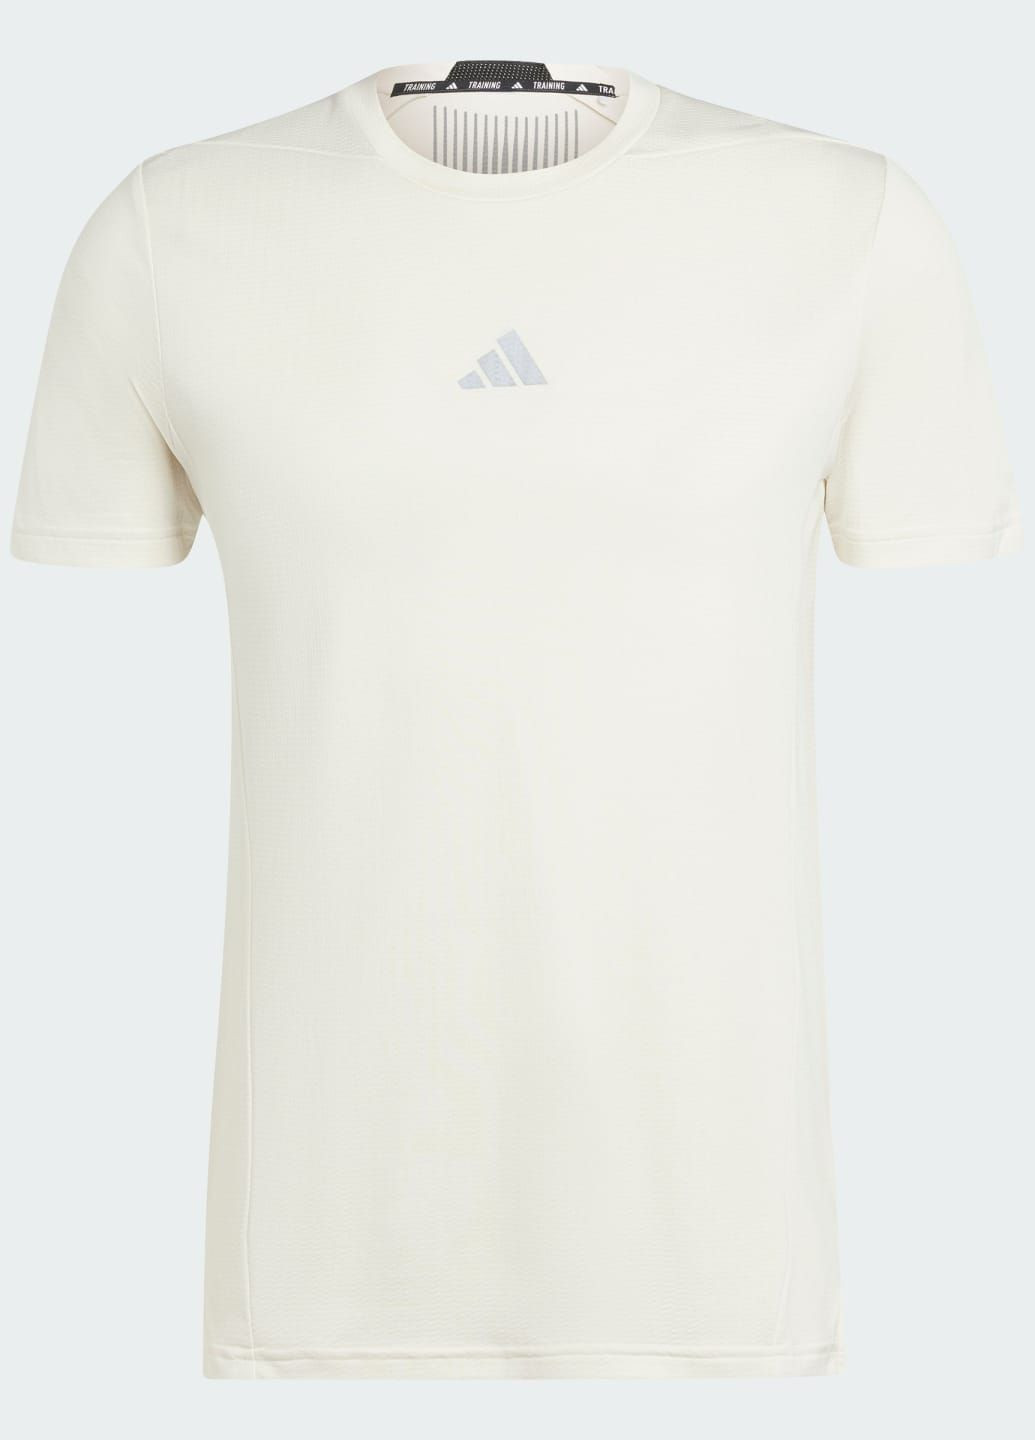 Біла футболка designed for training hiit workout heat.rdy adidas